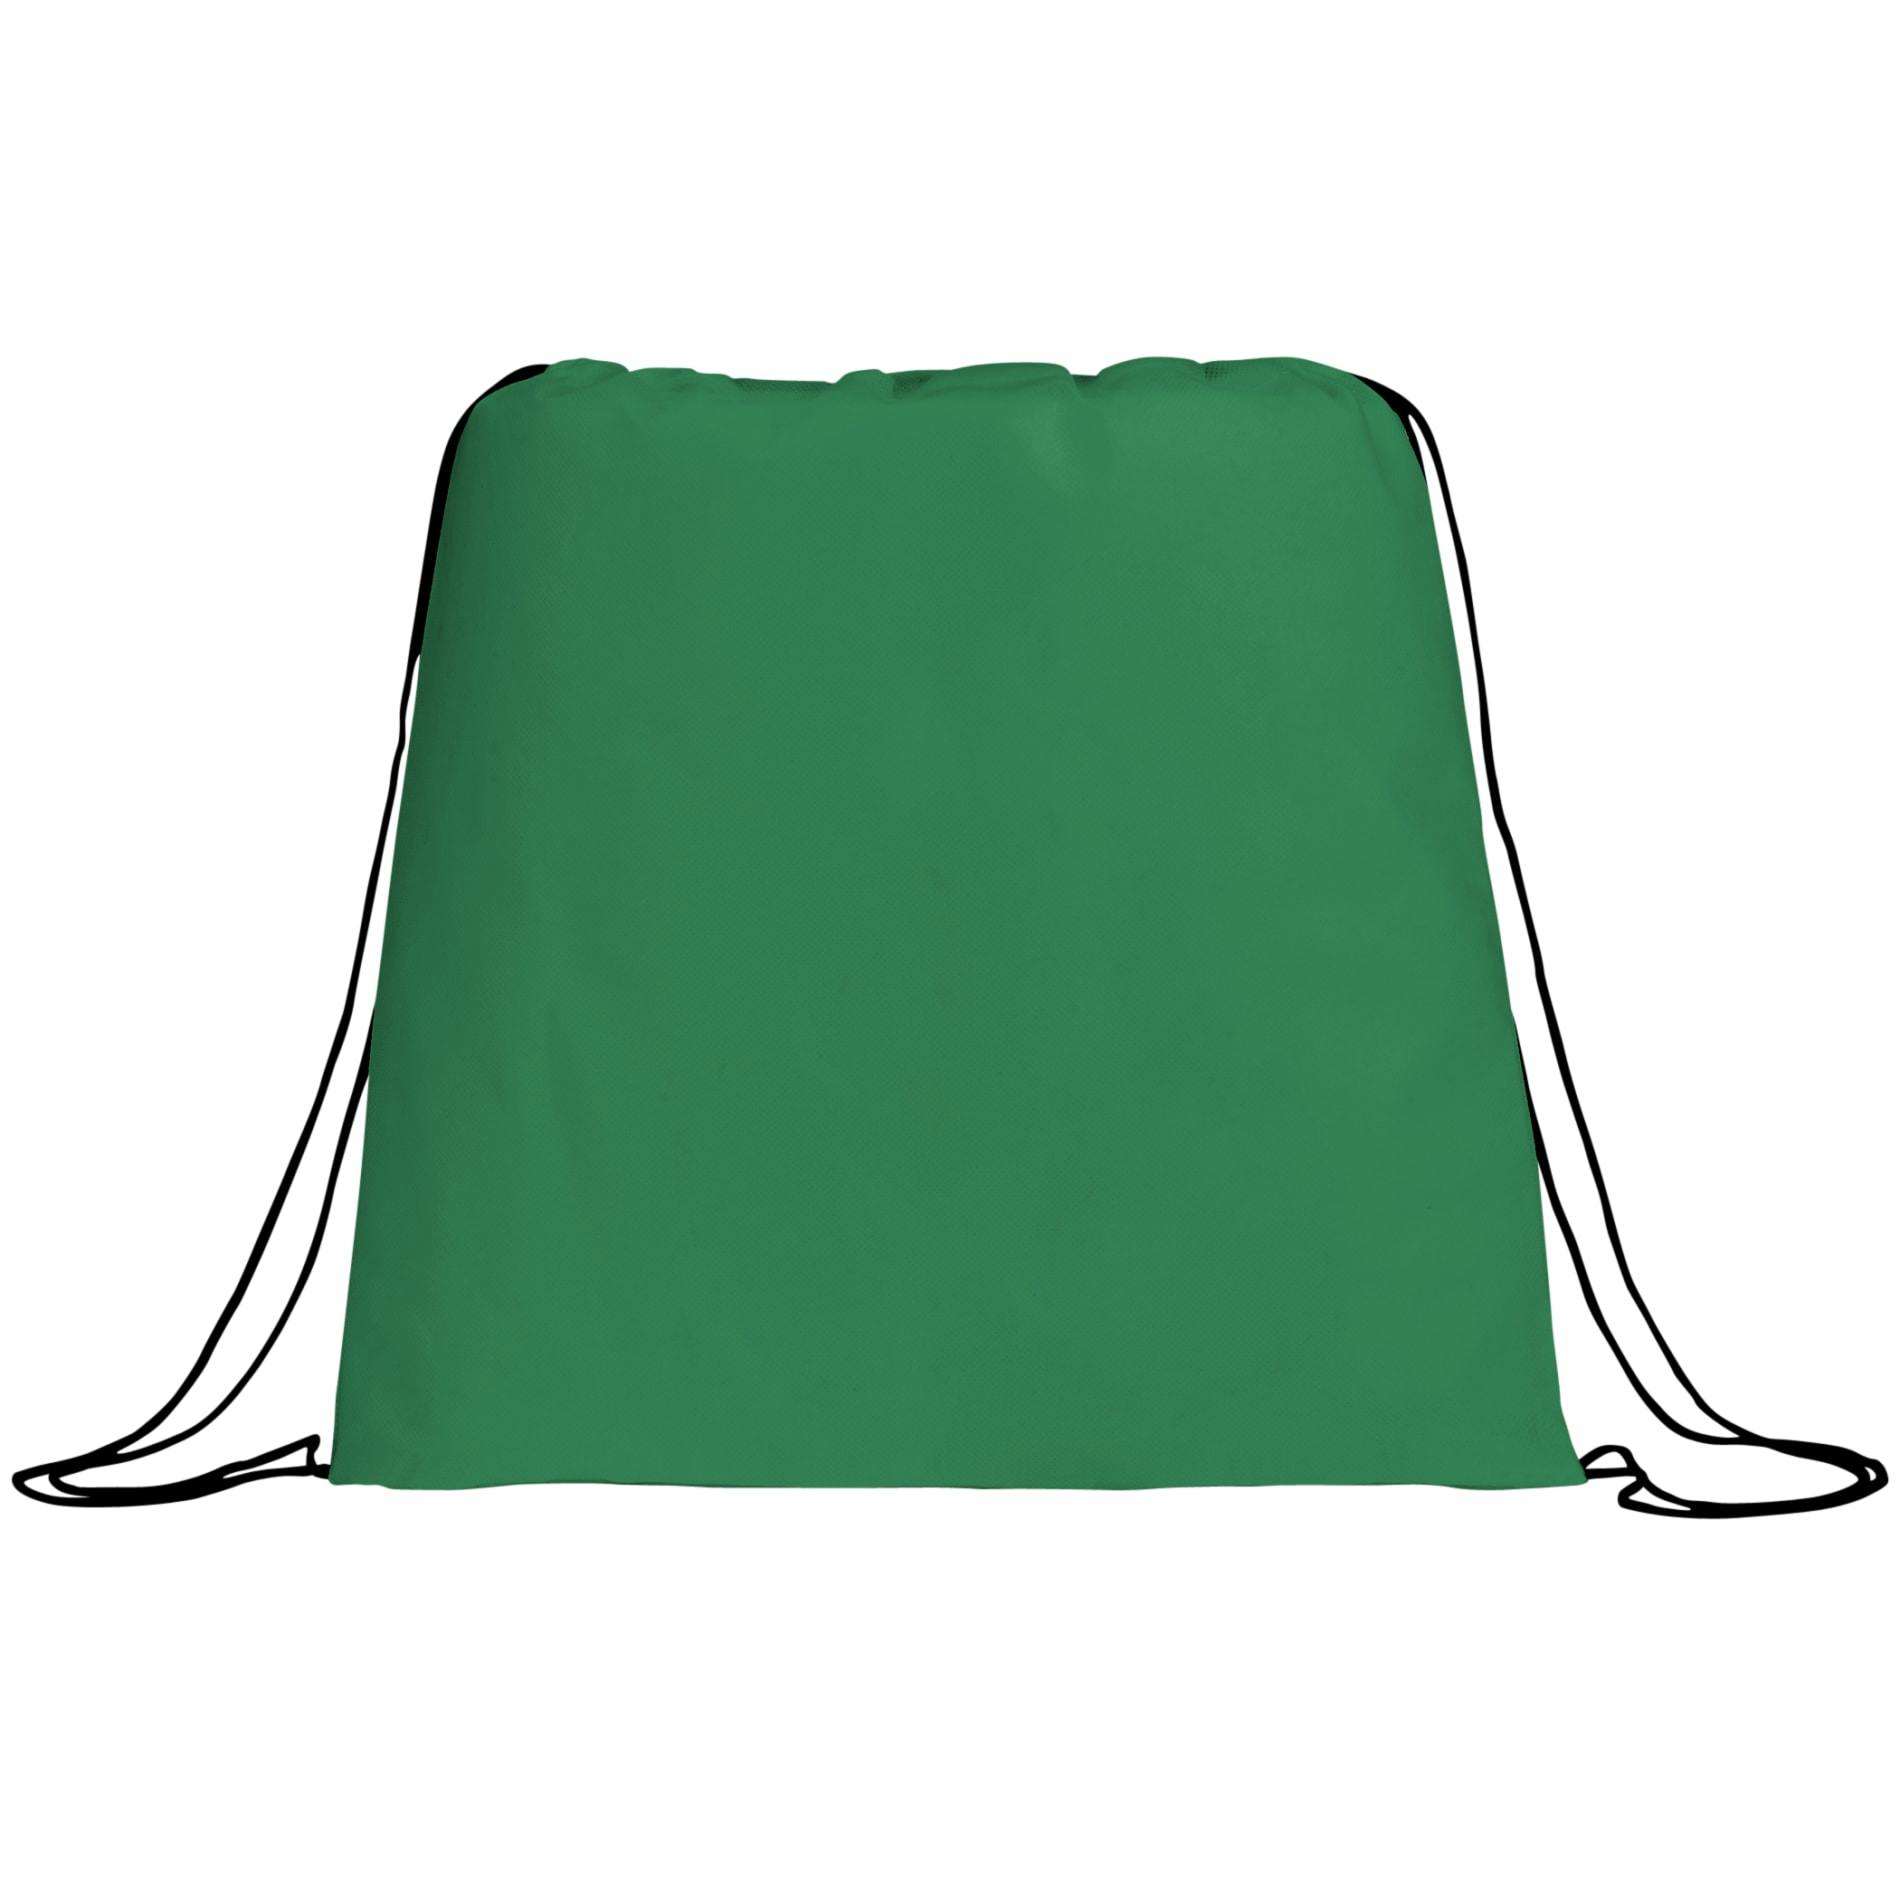 Evergreen Non-Woven Drawstring Bag - additional Image 4